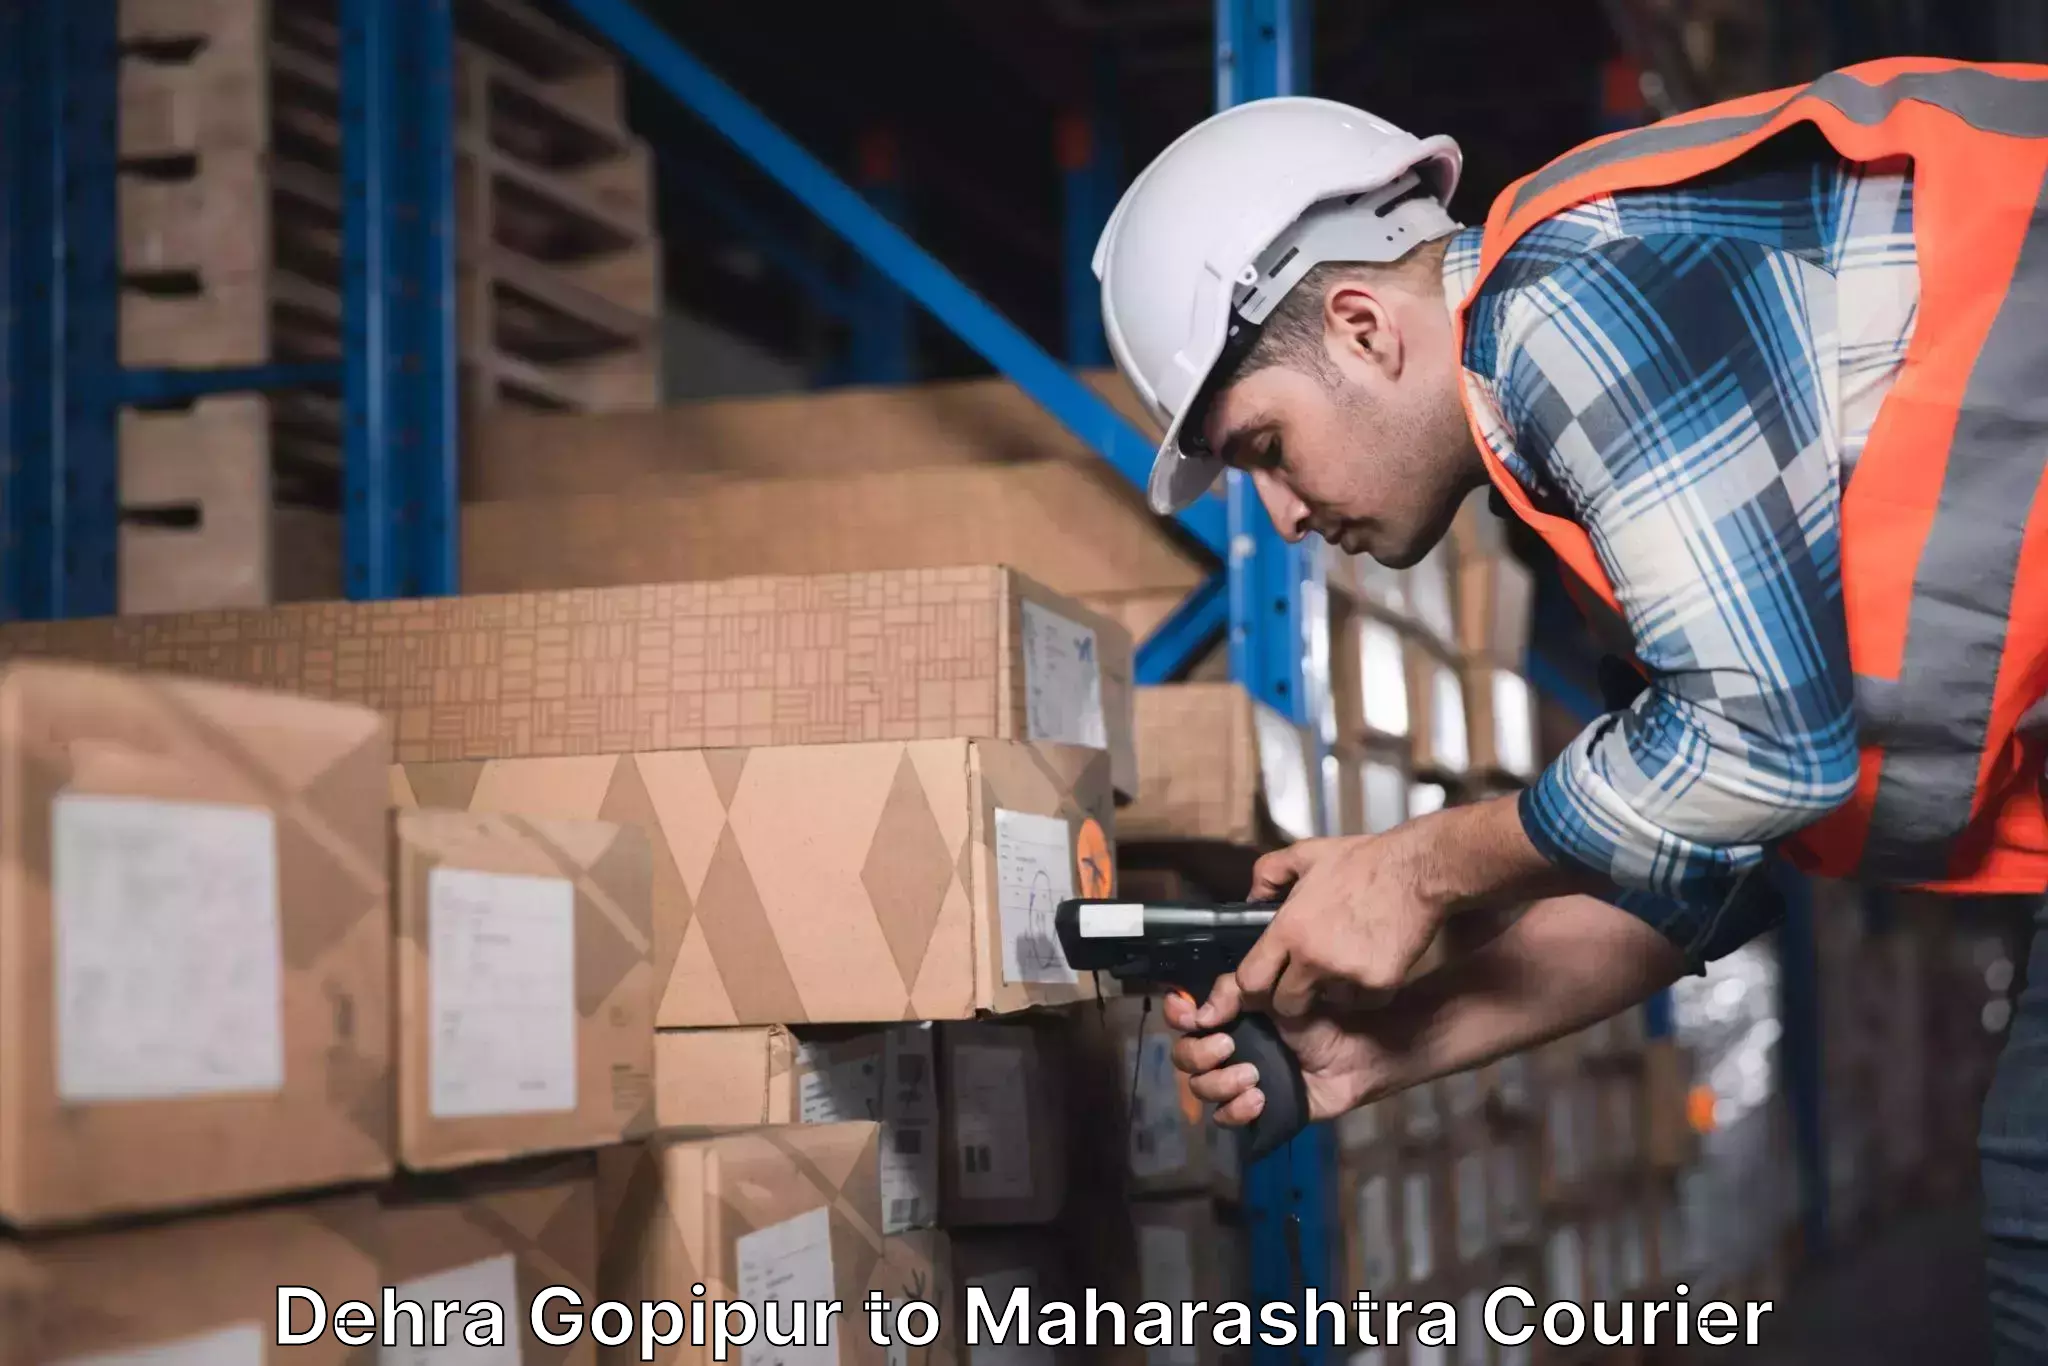 Business shipping needs Dehra Gopipur to Ramtek